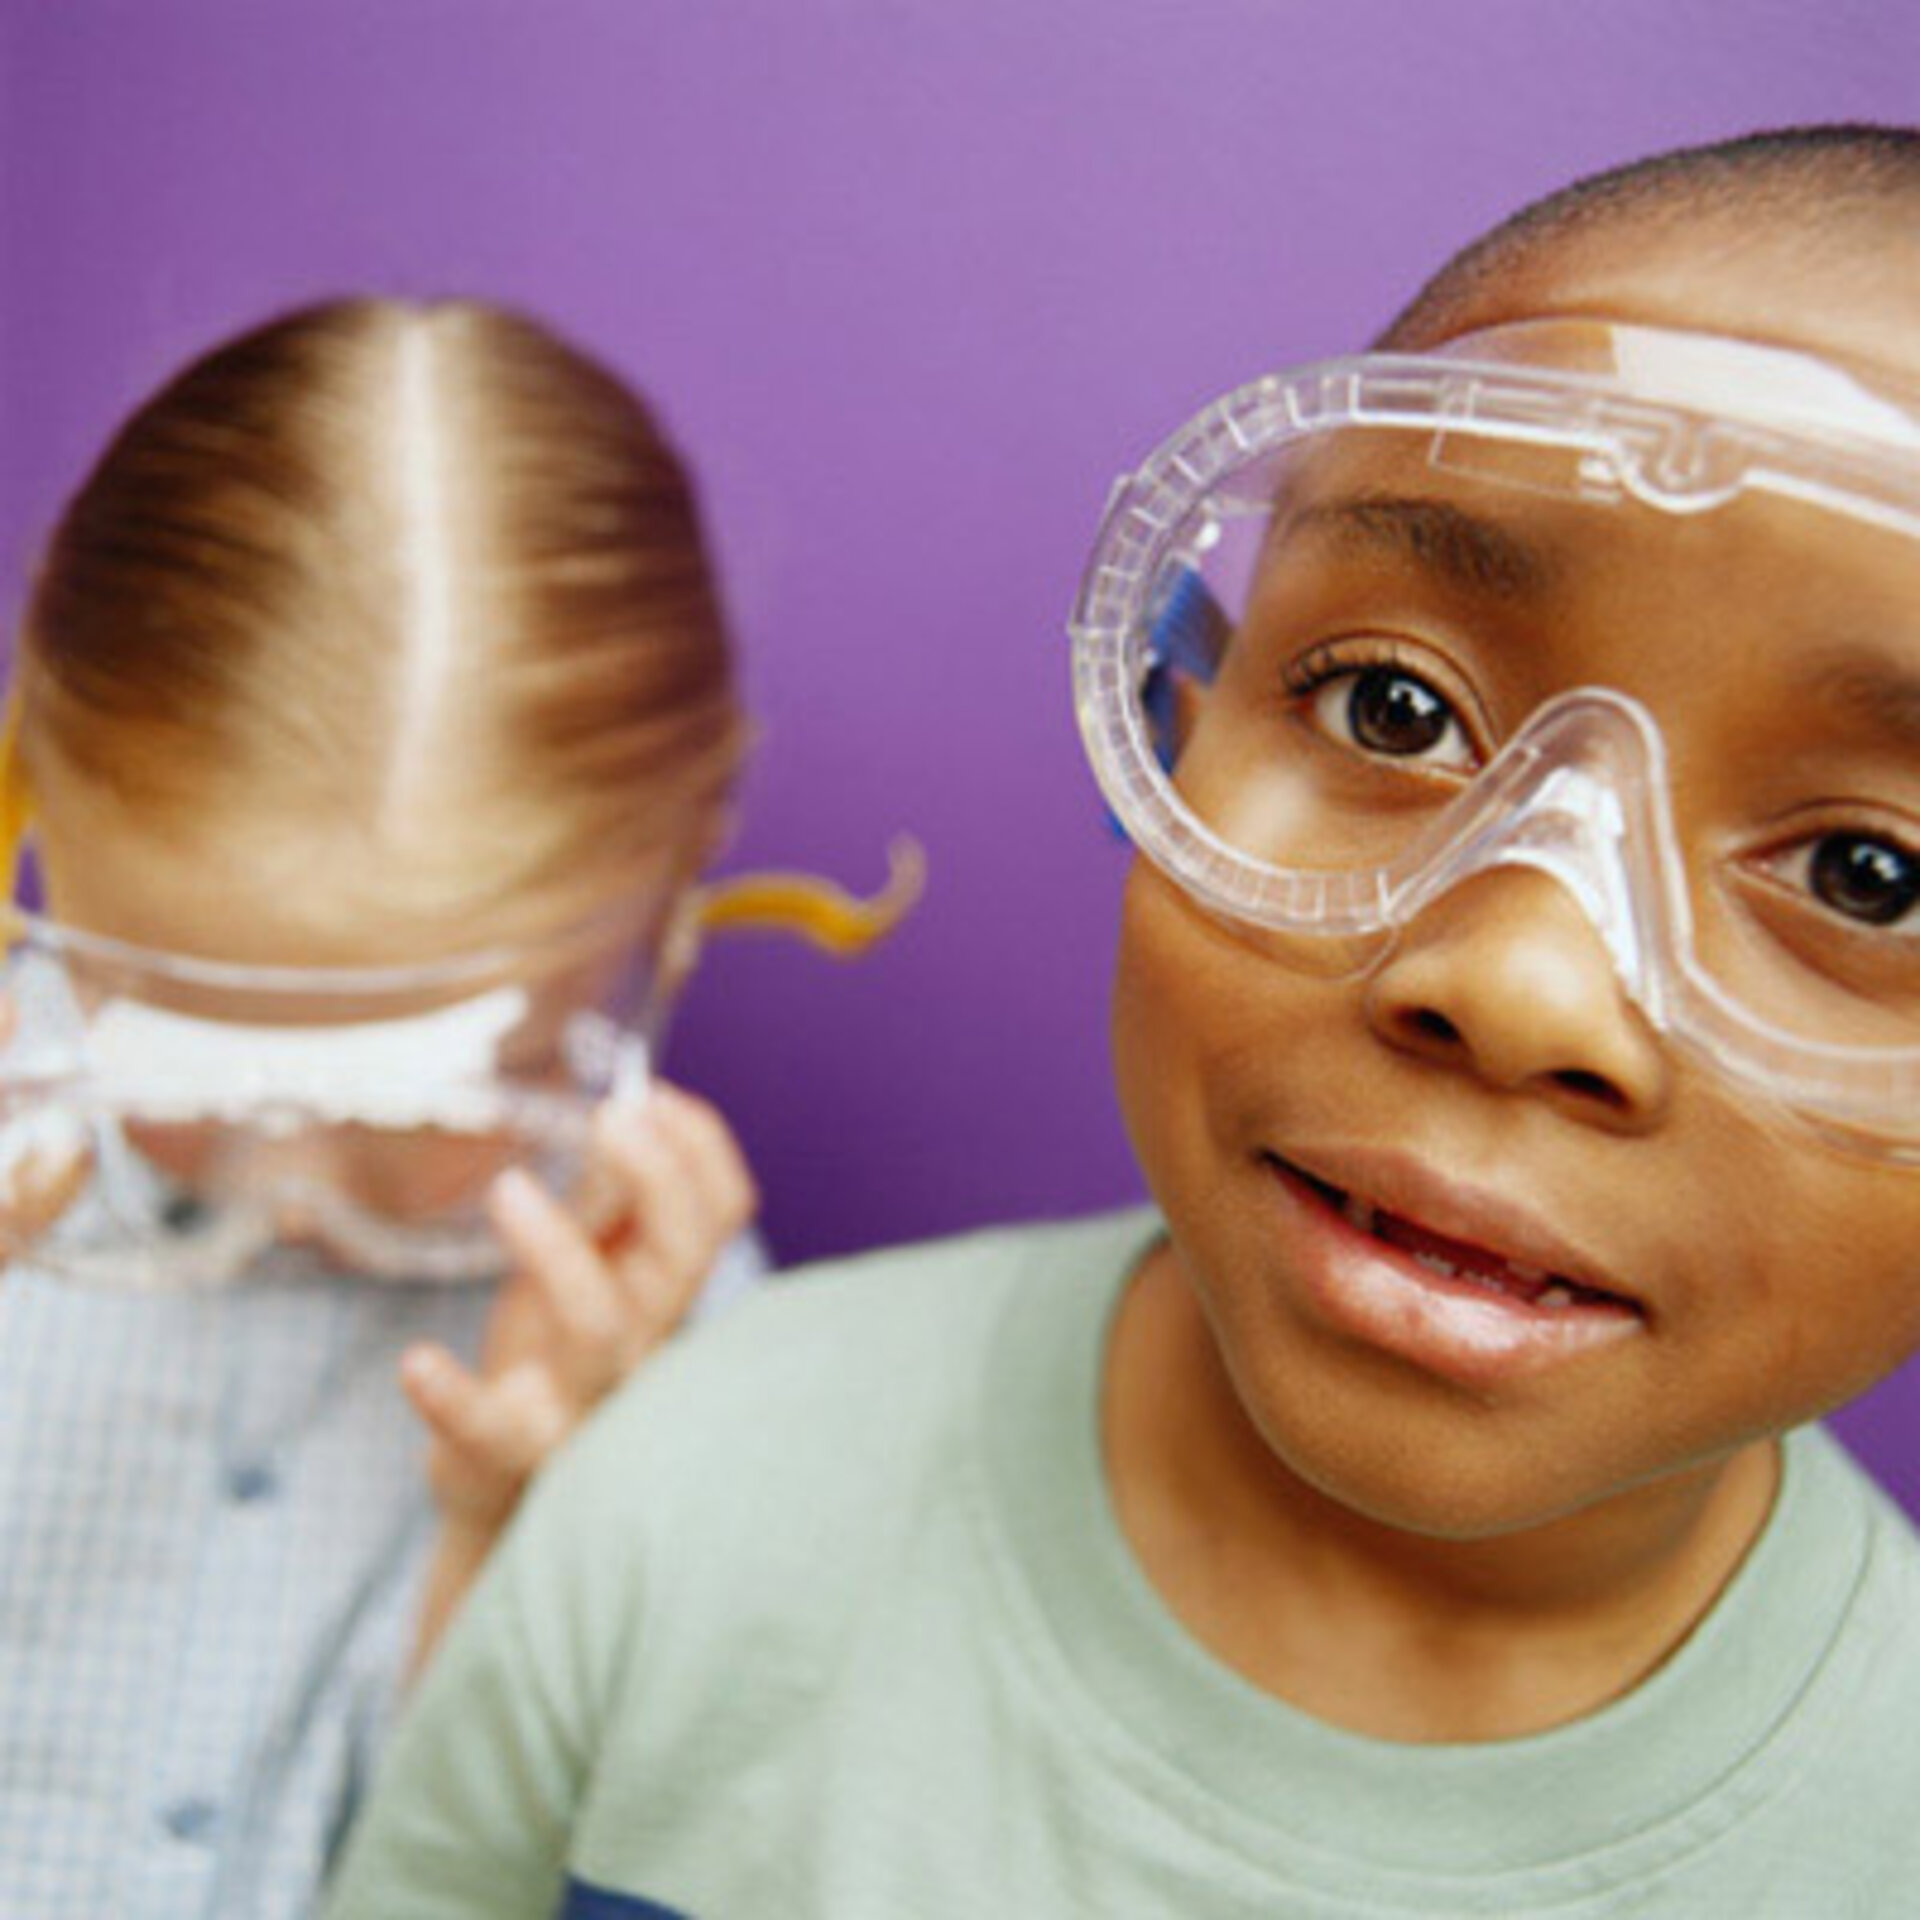 Children wear protective goggles